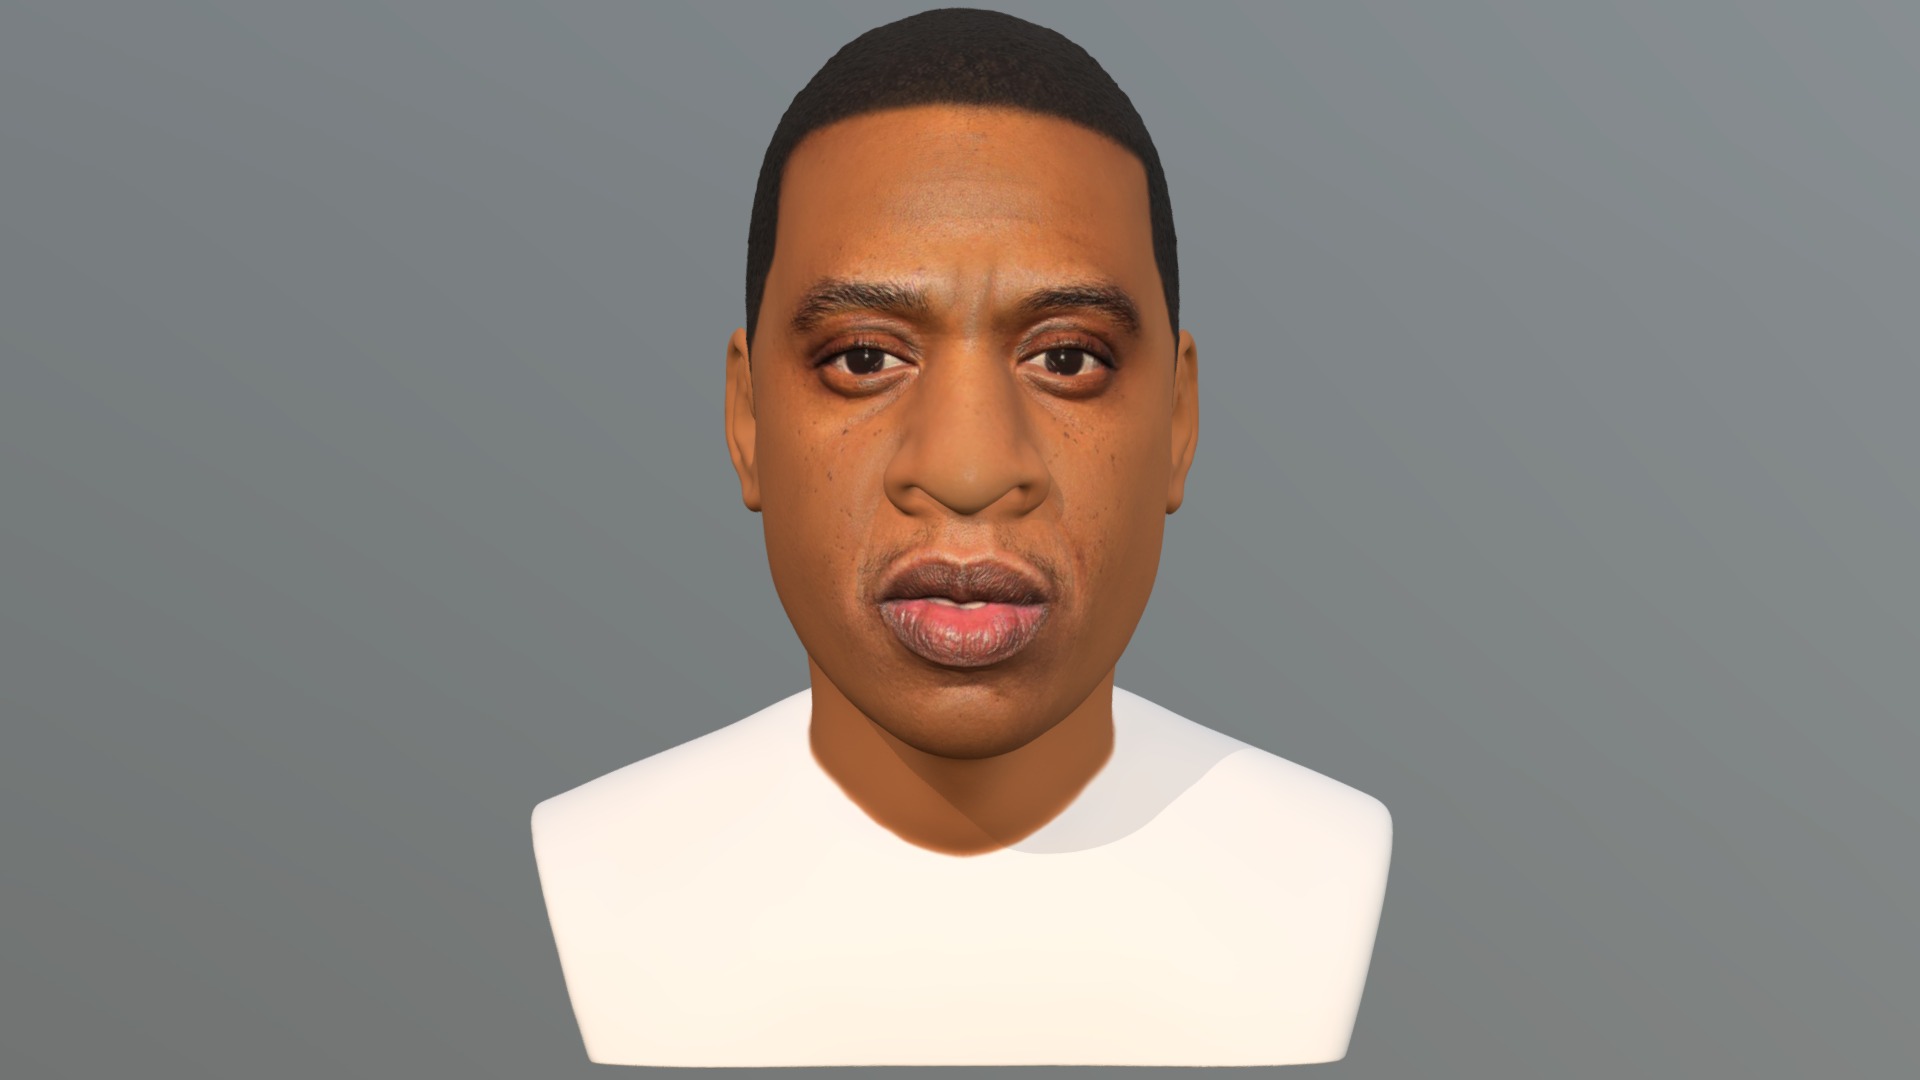 3D model Jay-Z bust for full color 3D printing - This is a 3D model of the Jay-Z bust for full color 3D printing. The 3D model is about a person with a mustache.